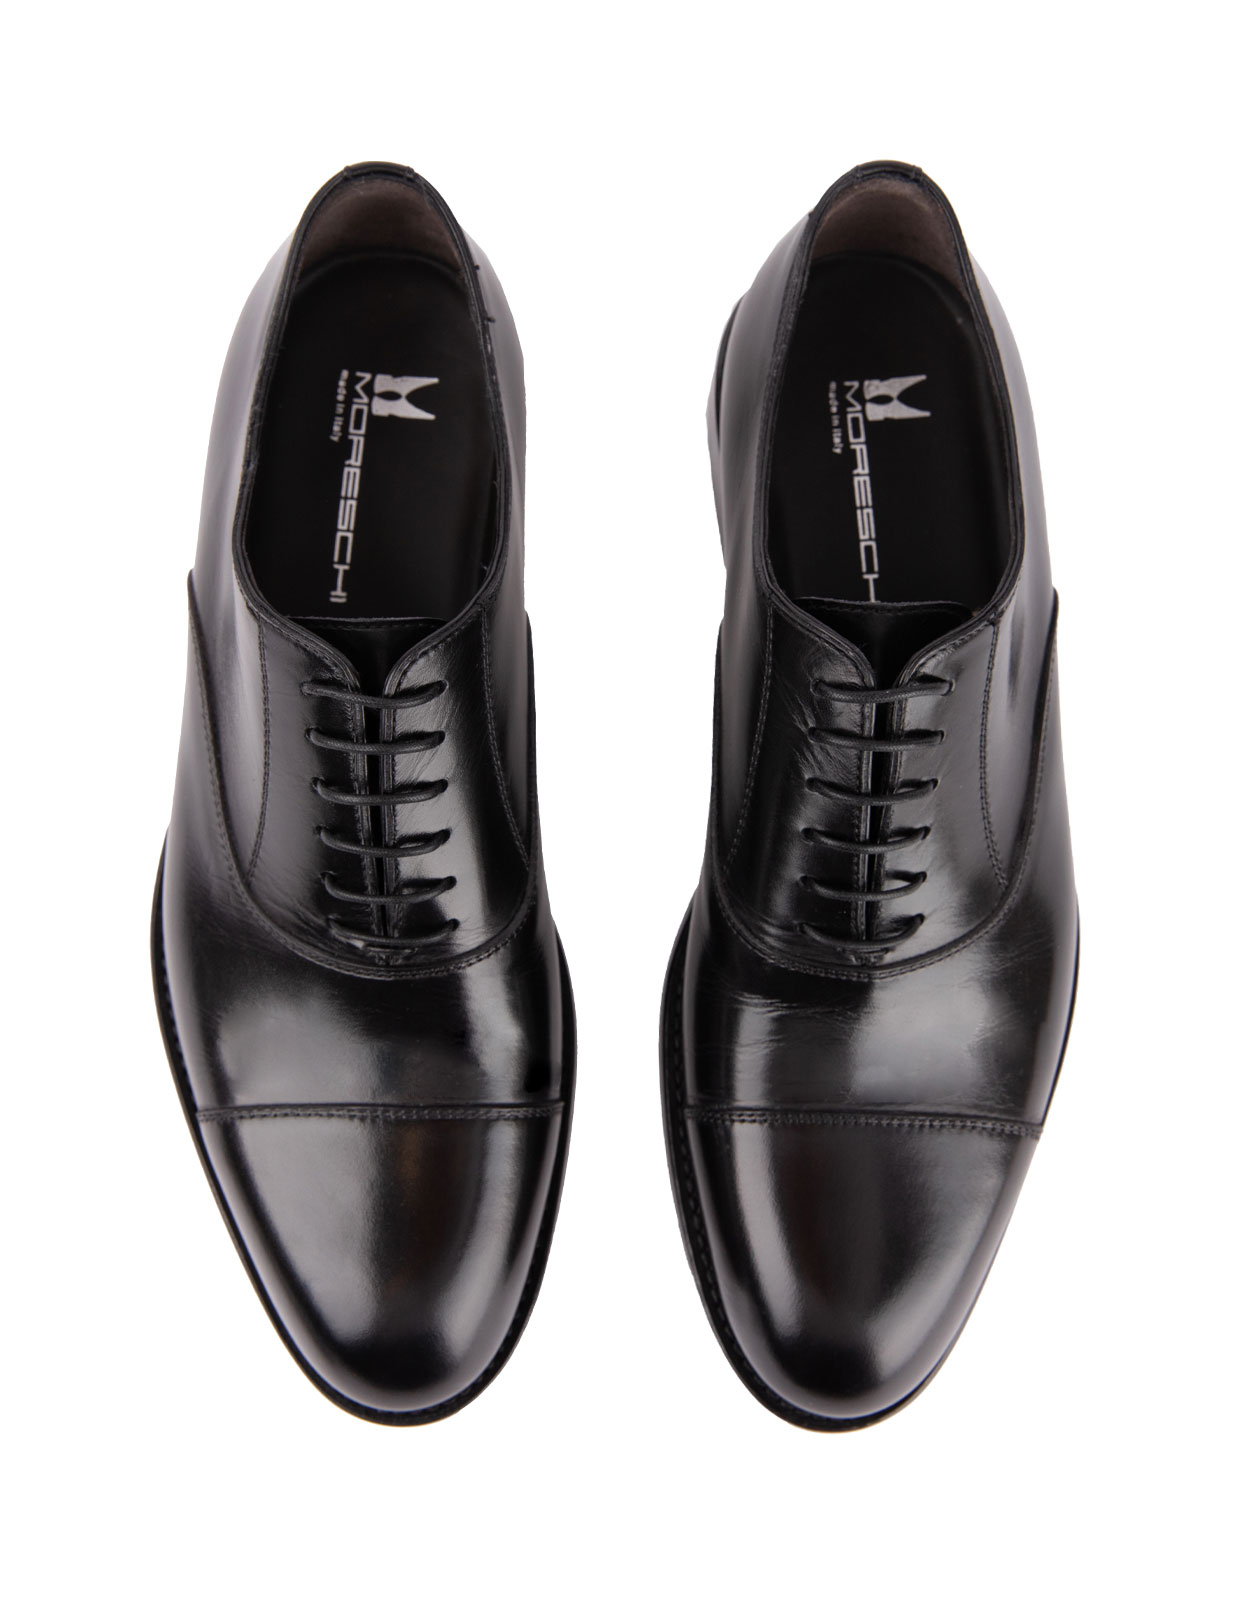 Cleveland Oxford Shoes Black Stl 6